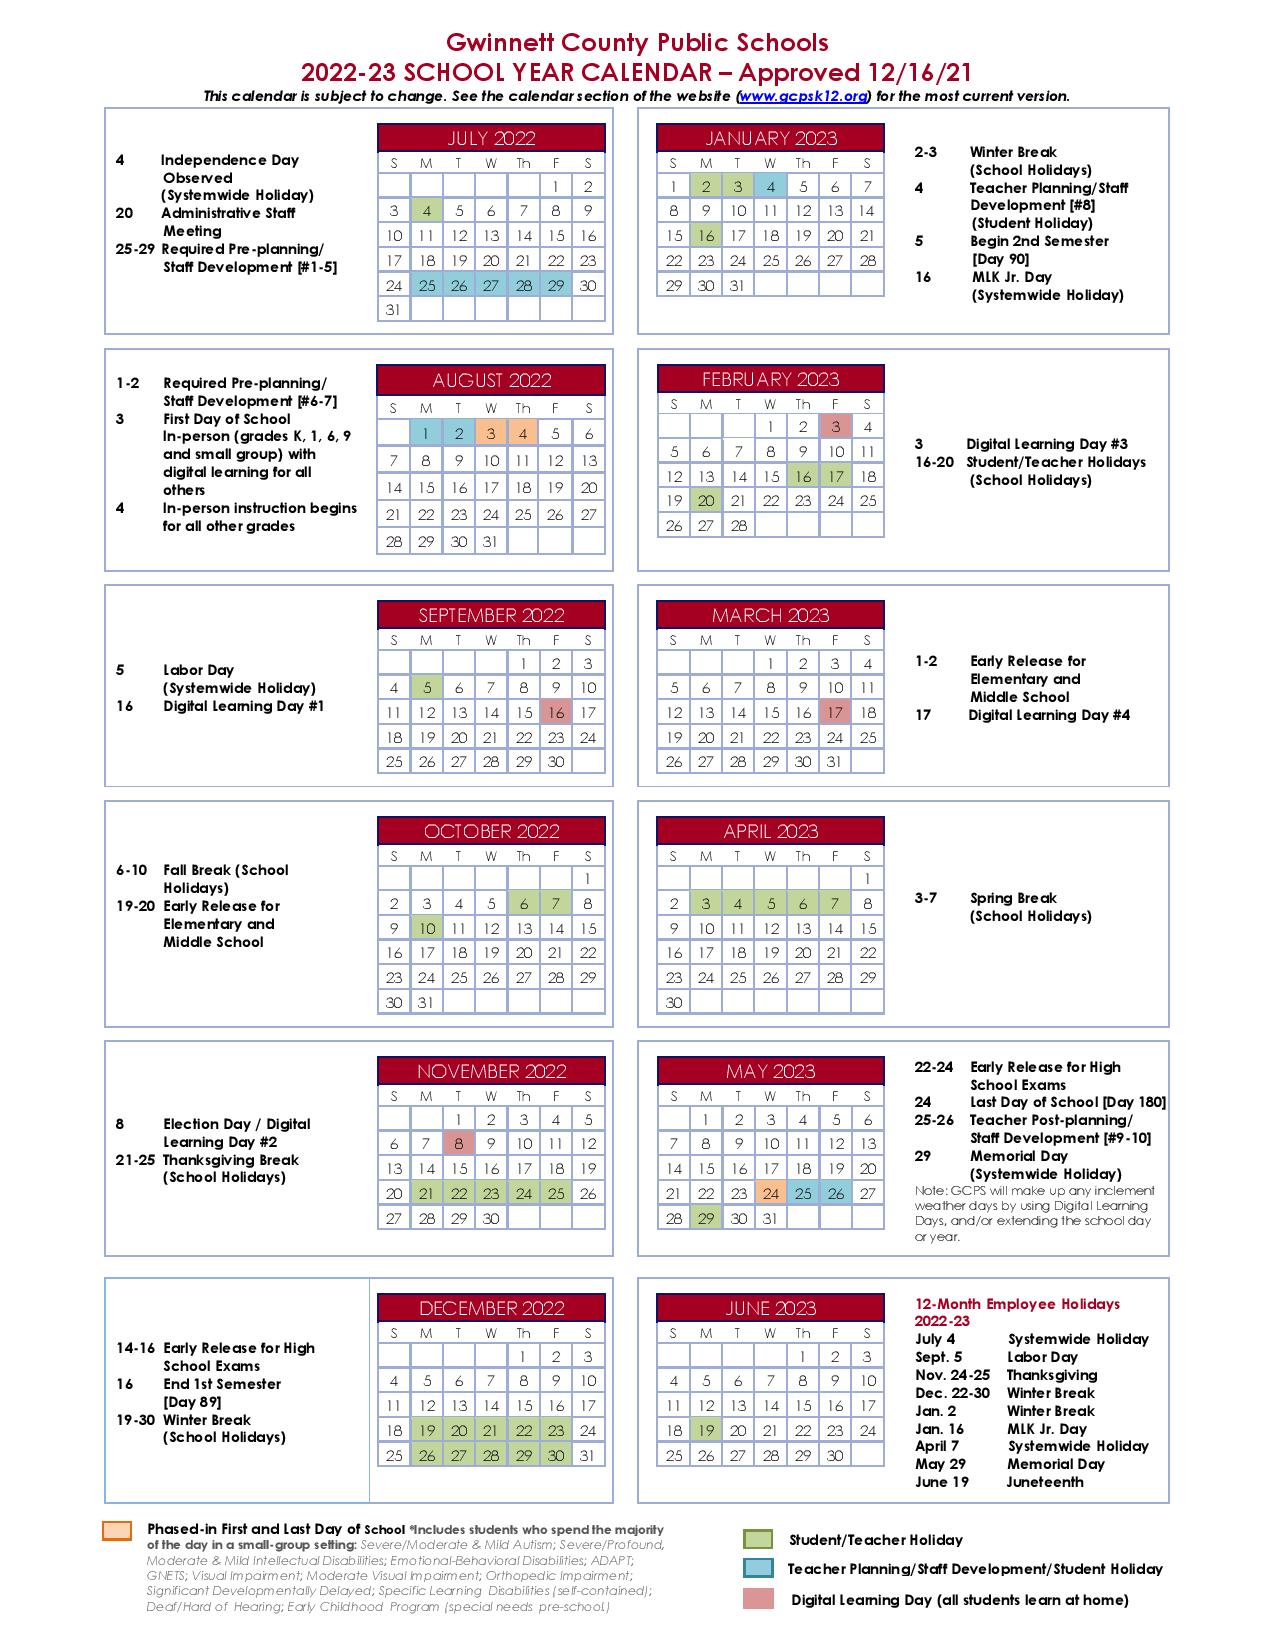 Gcu Fall 2023 Calendar Printable Calendar 2023